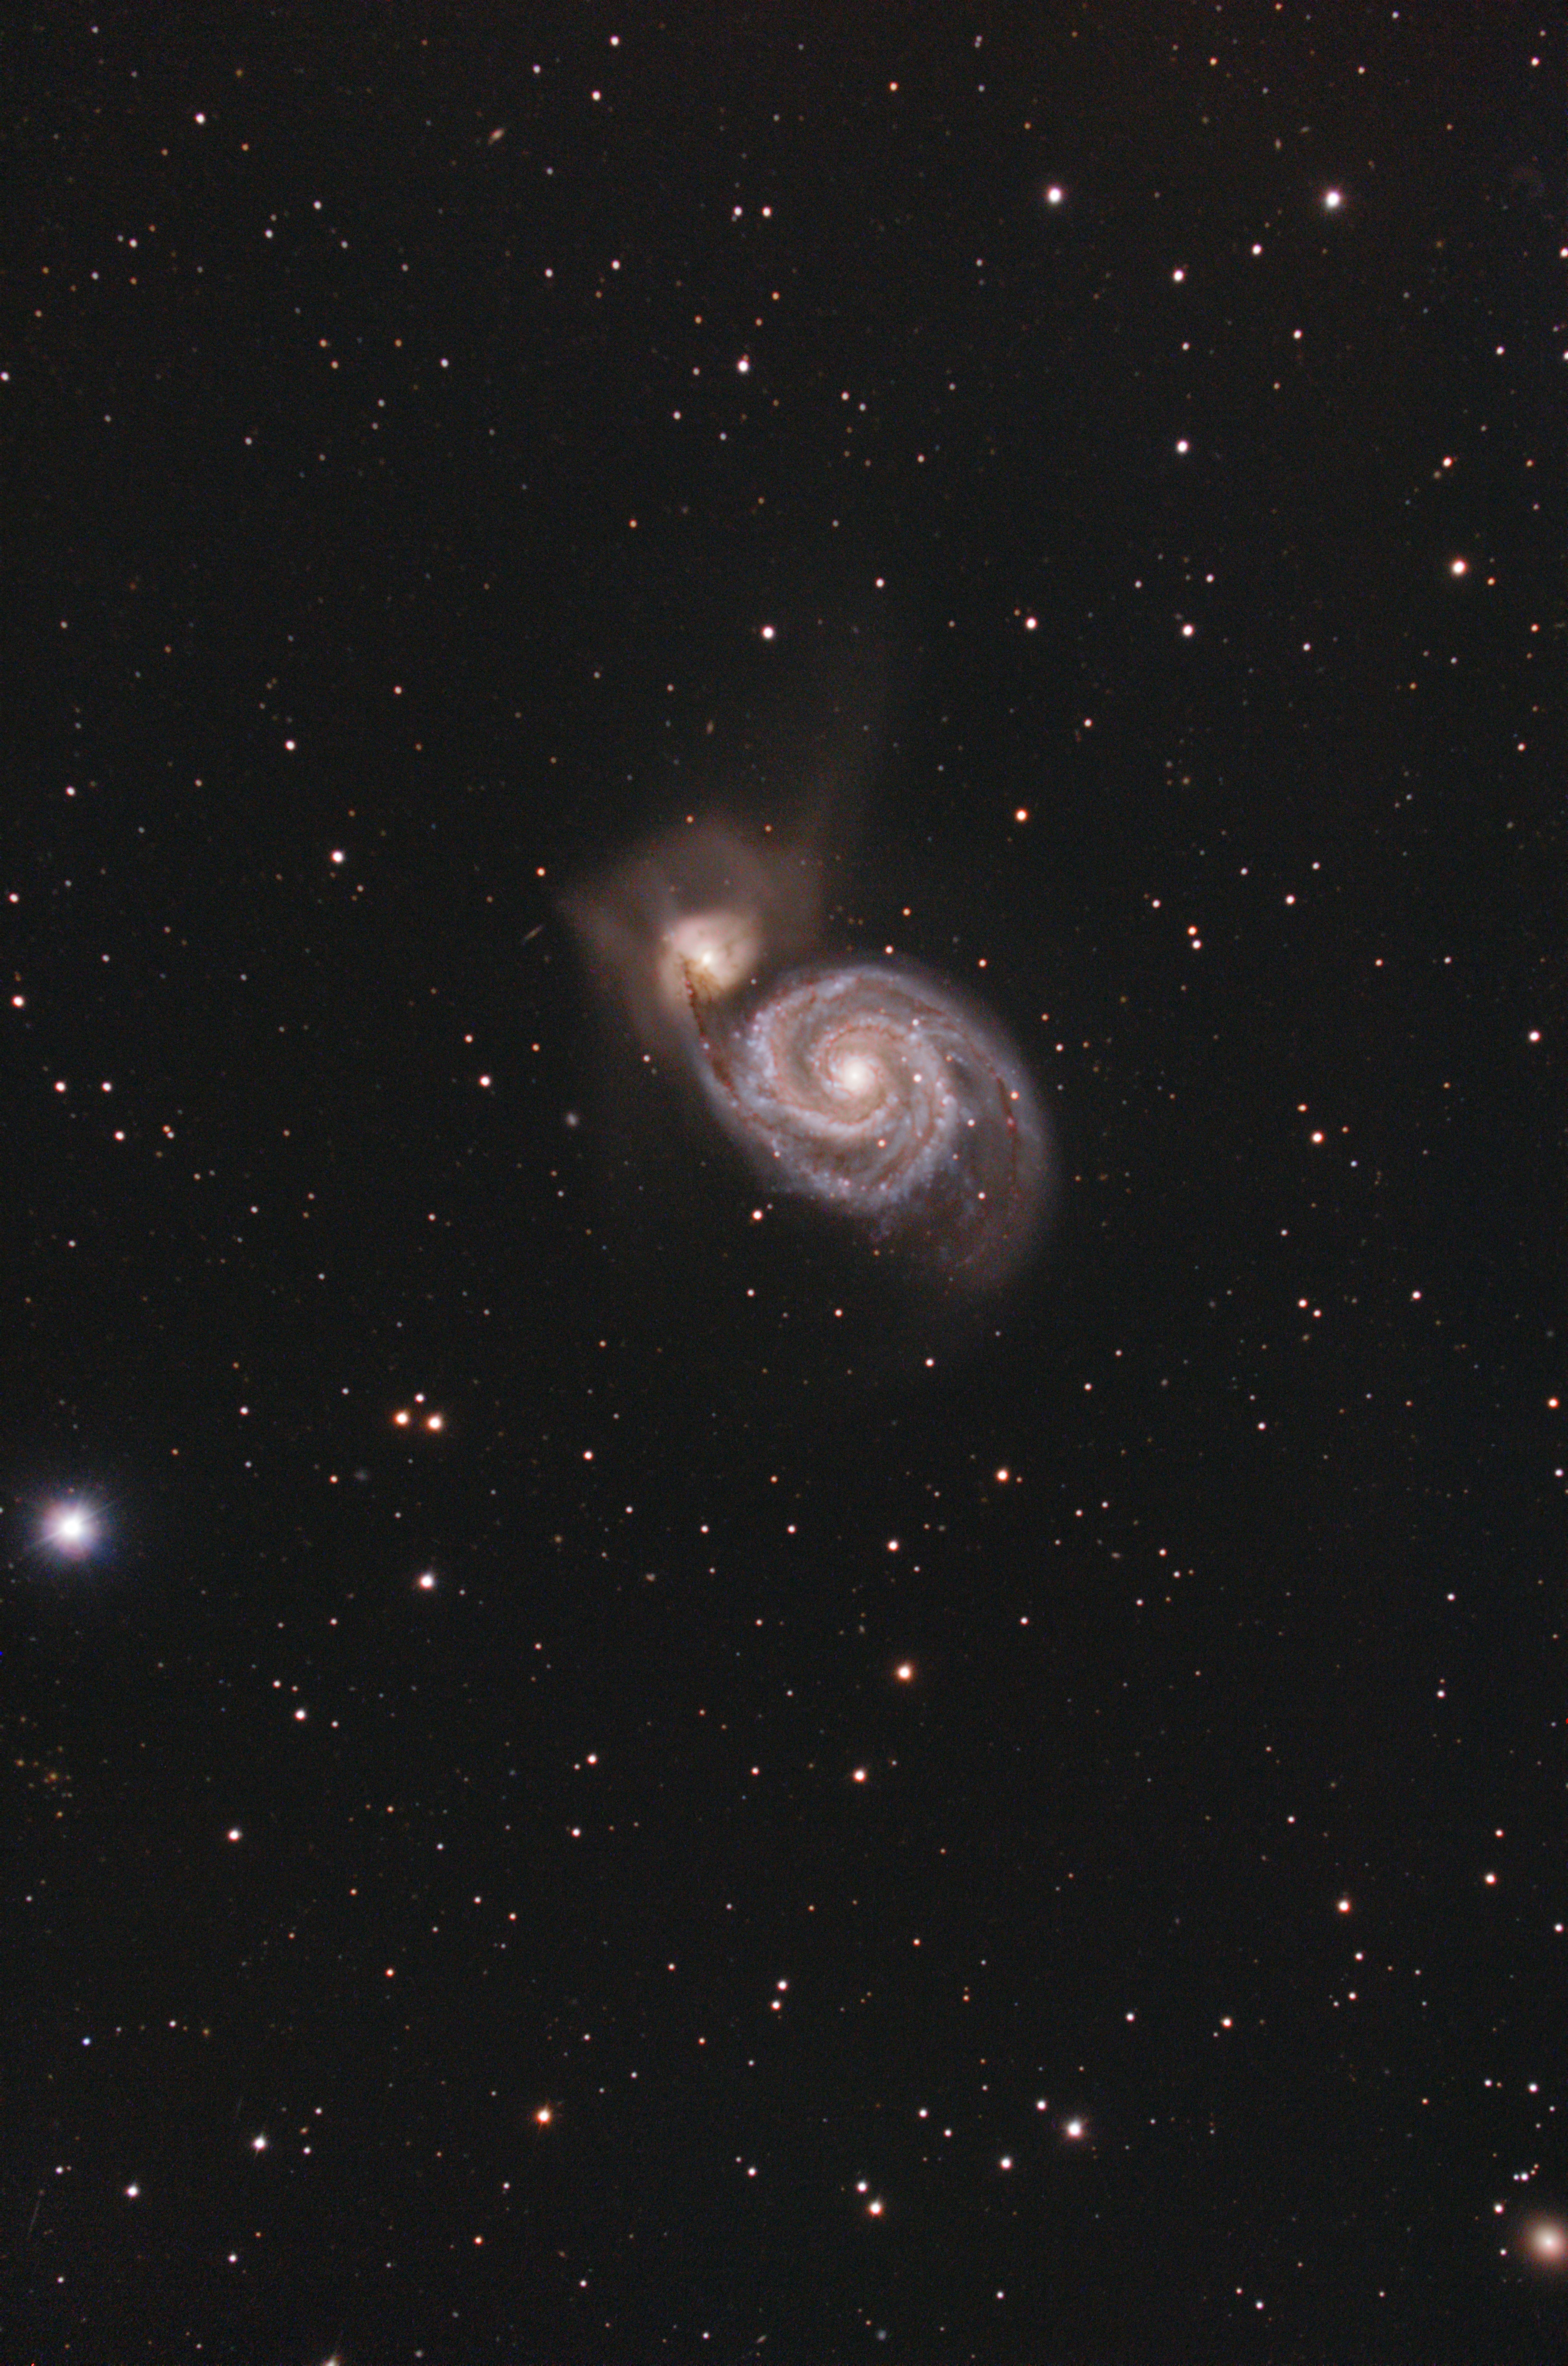 The Whirlpool galaxy - M51